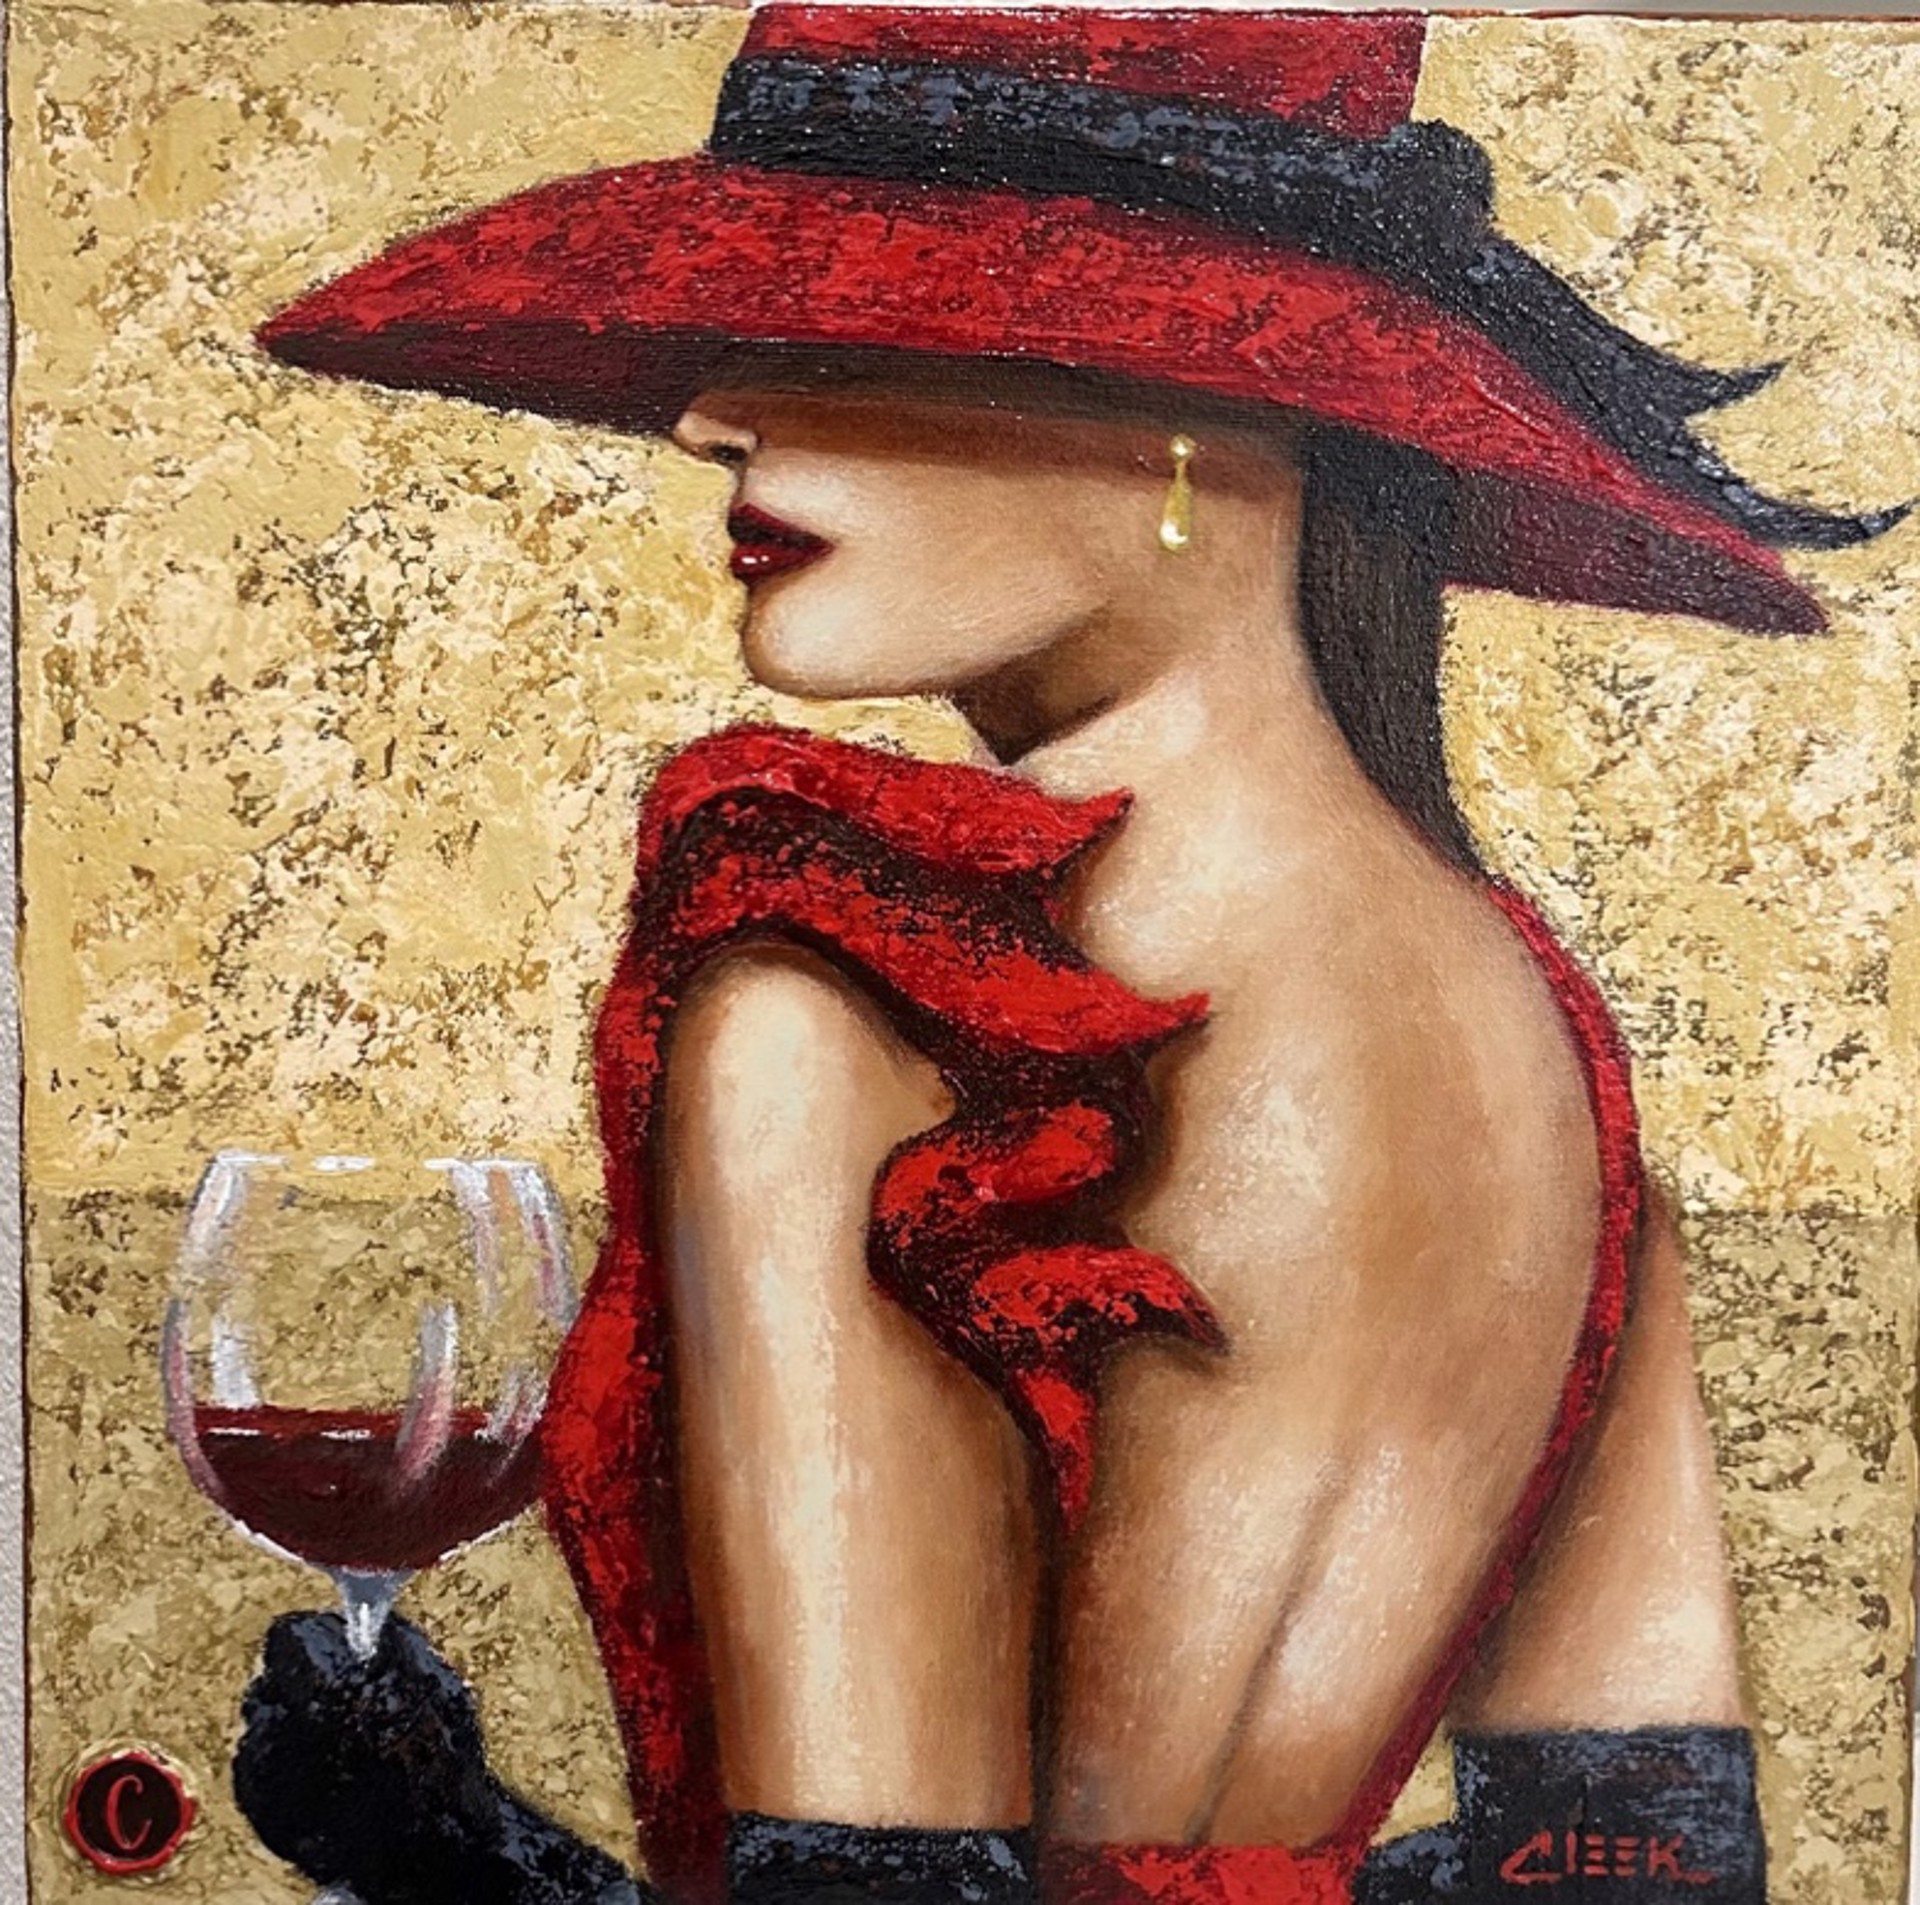 Wine Diva by Scott Cleek